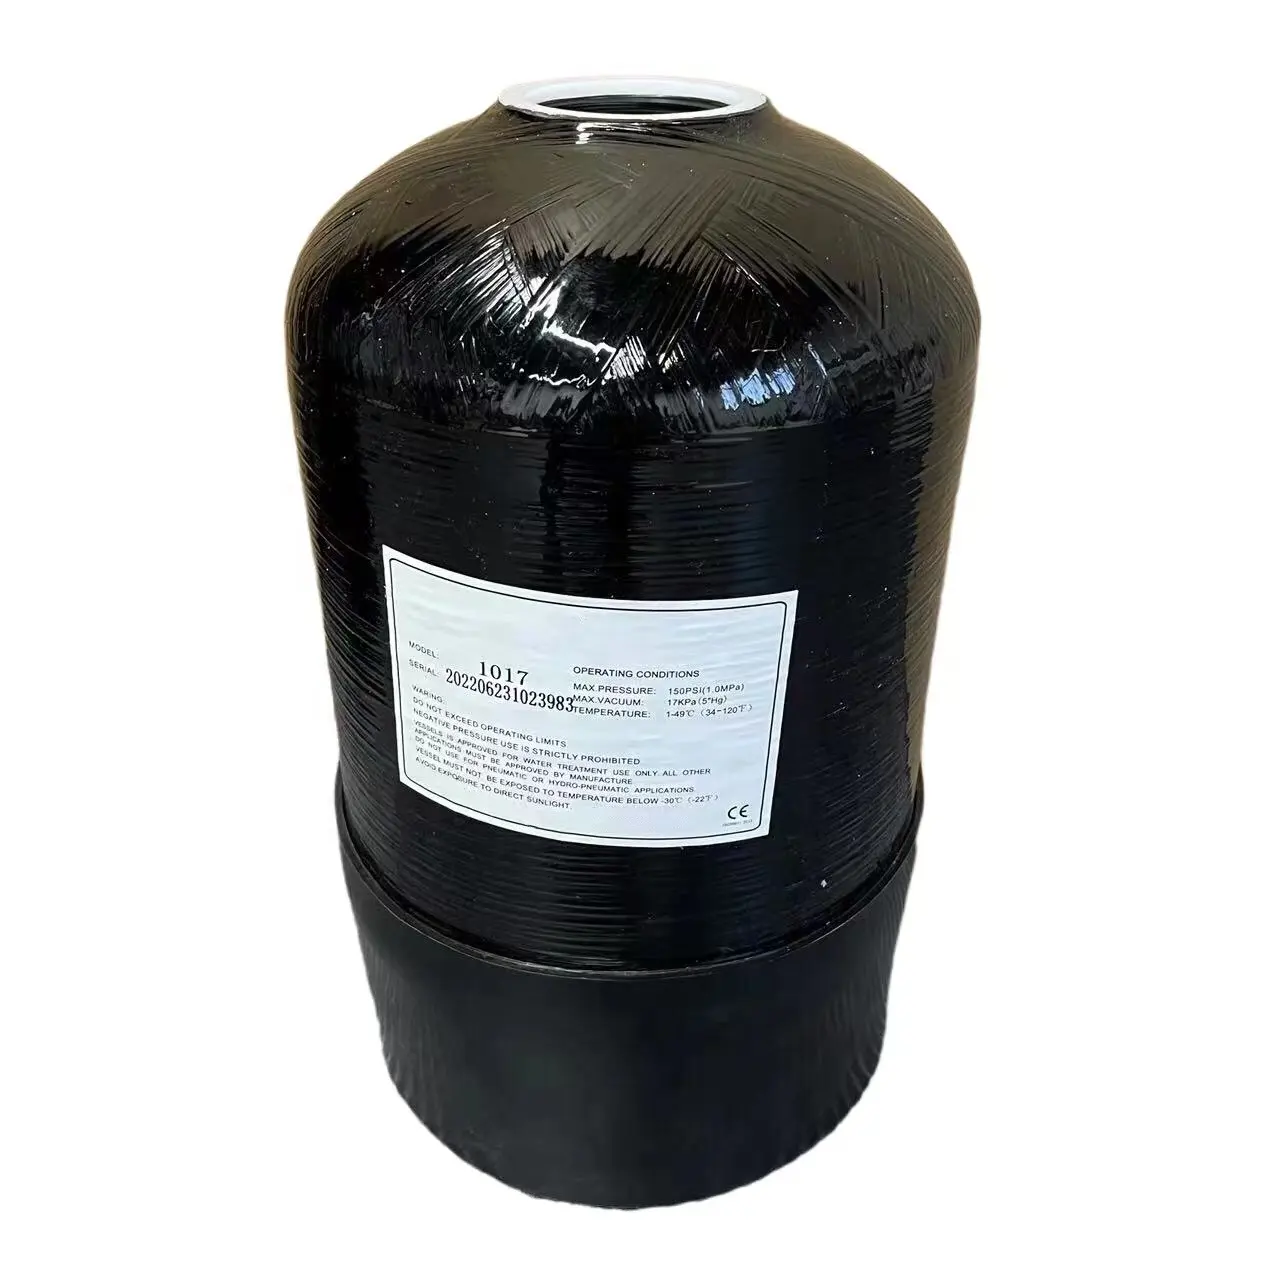 0613,0617,0635,817,1017 Fiber Glass FRP tank Black colour for water filter water treatment tank for softener & medium filter